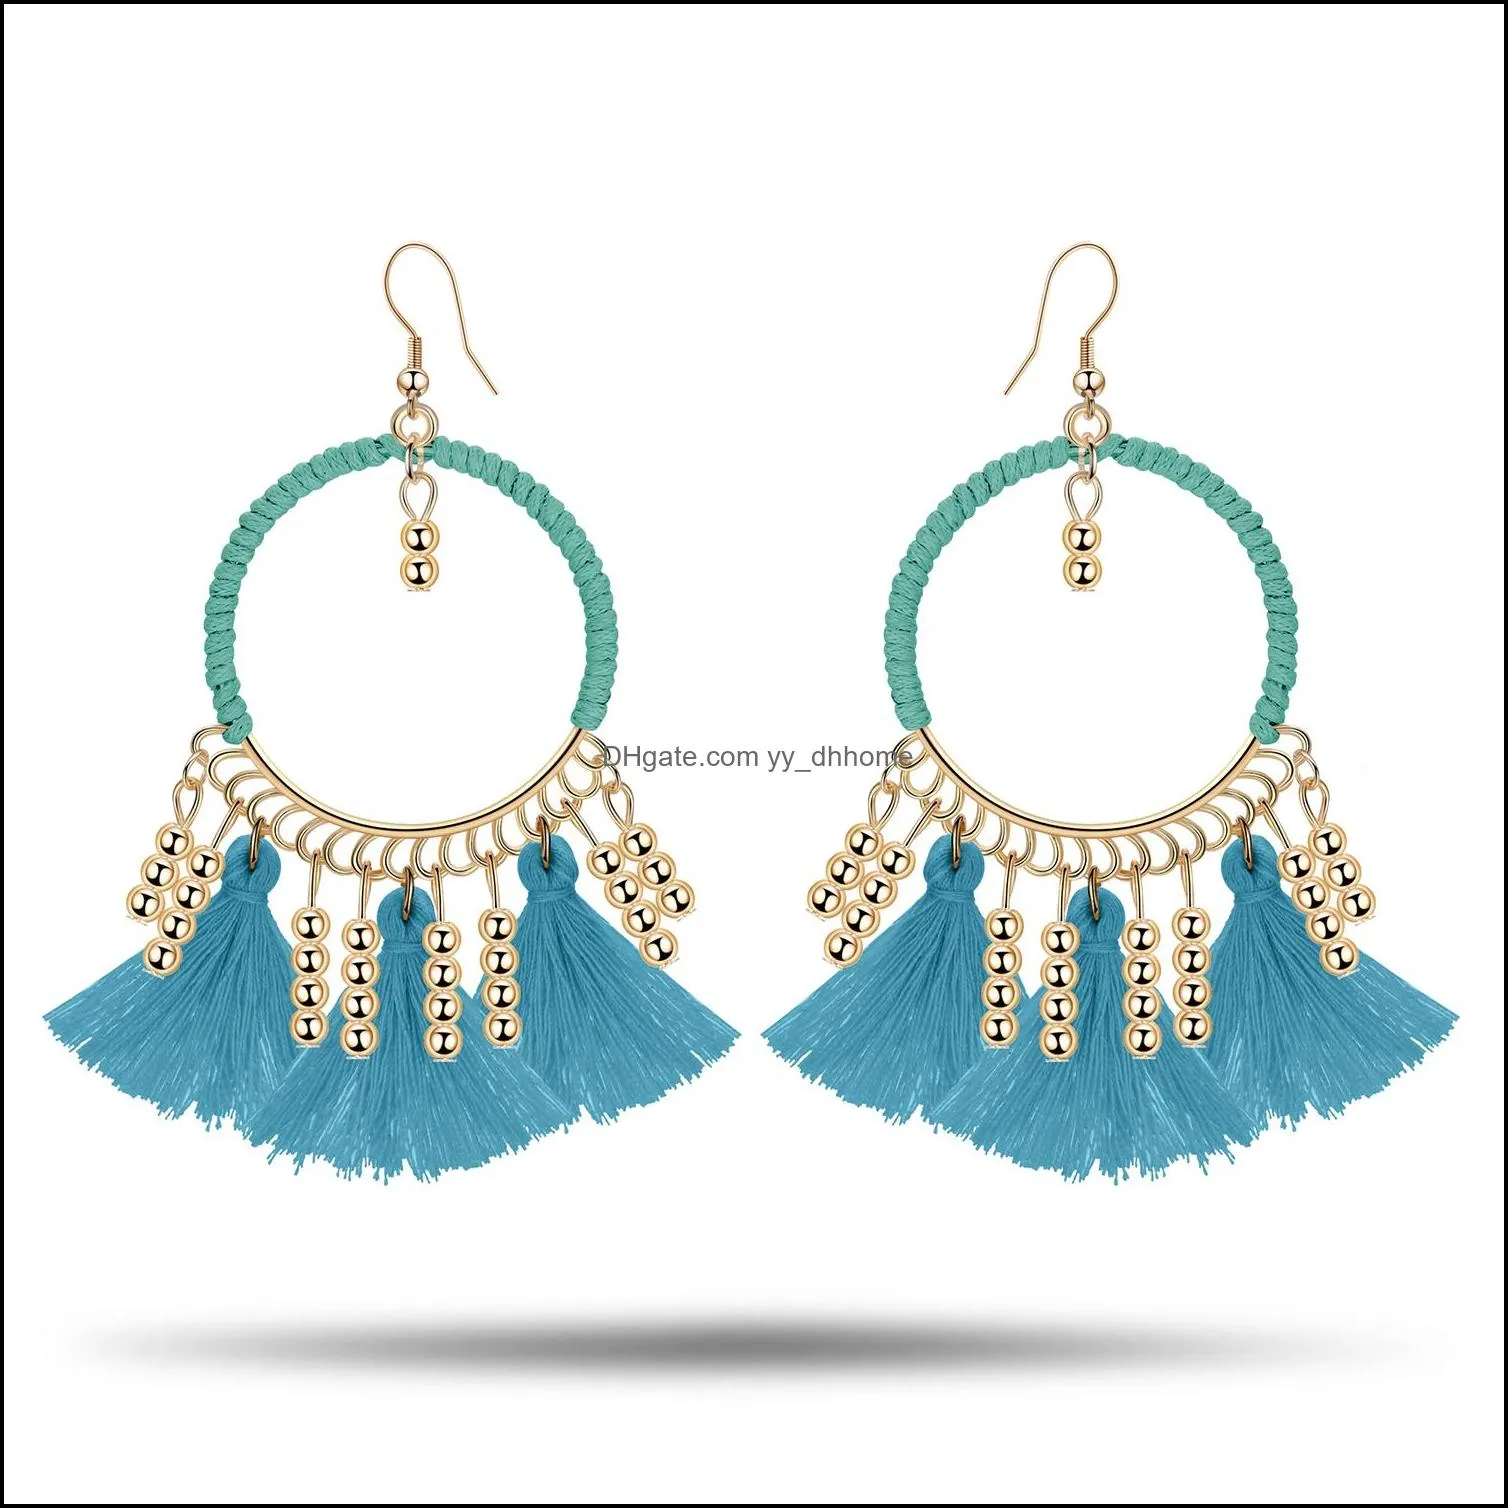 bohemian earrings thread beaded tassel fringe drop dangle gifts for women daily jewelry 5 color